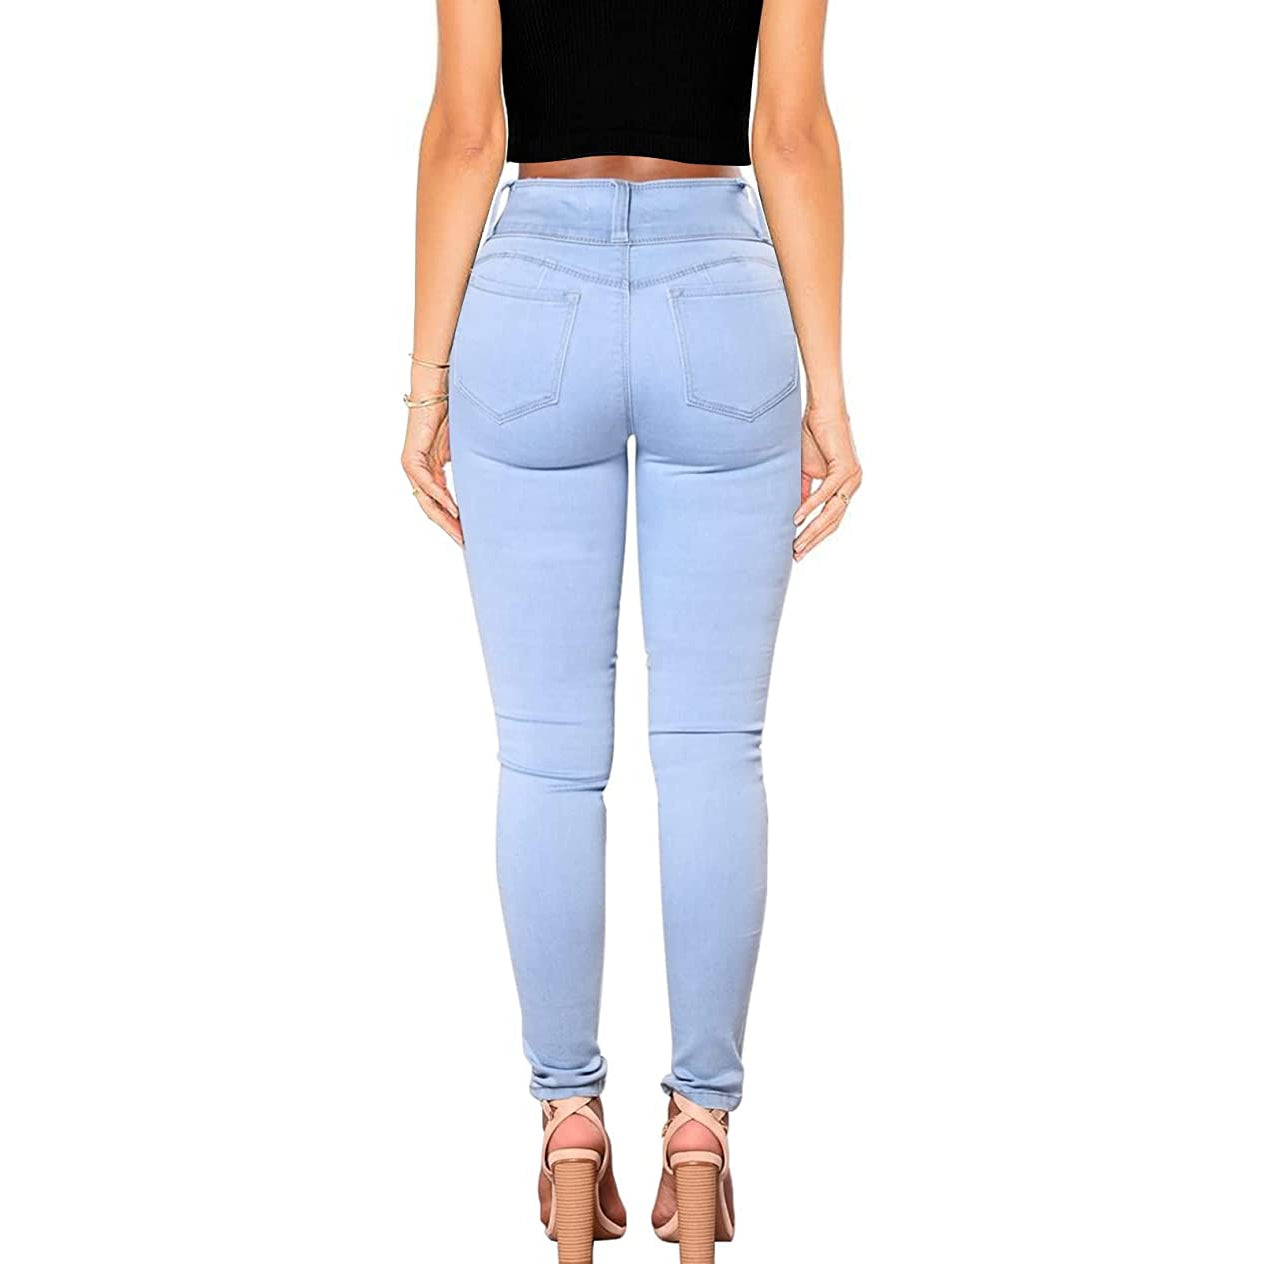 KUNMI Womens Classic High Waisted Jeans online KUNMI Butt Sl Lifting – Skinny Stretch